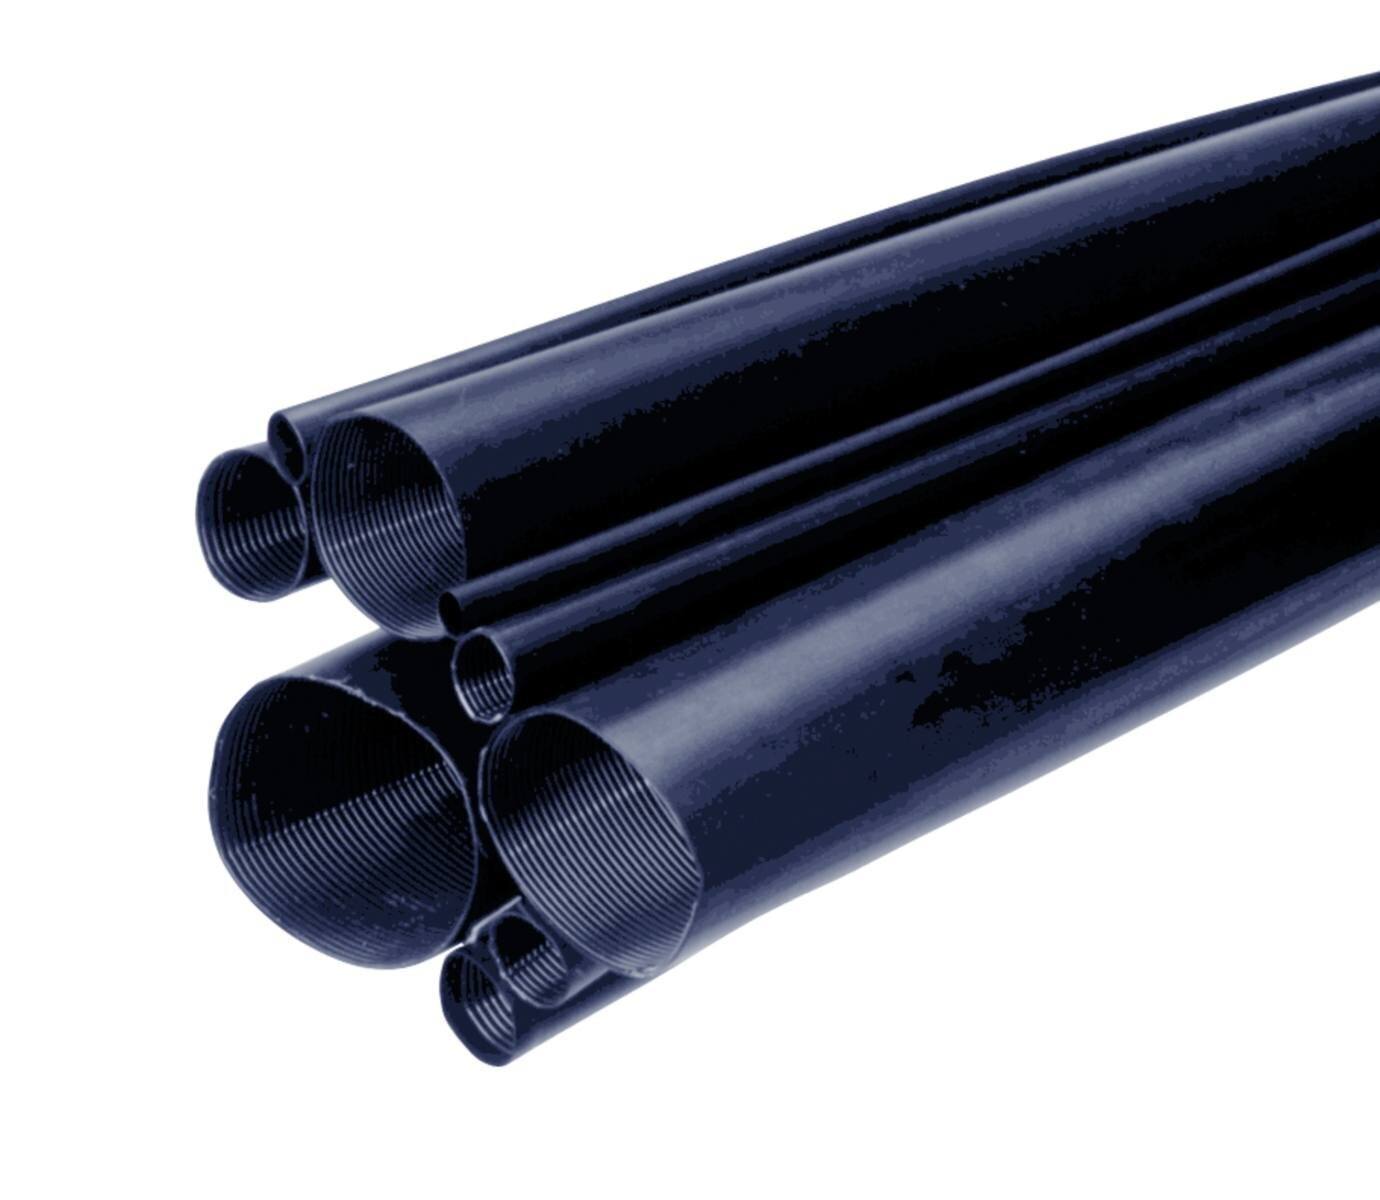 3M MDT-A Medium wall heat shrink tubing with adhesive, black, 12/3 mm, 1 m